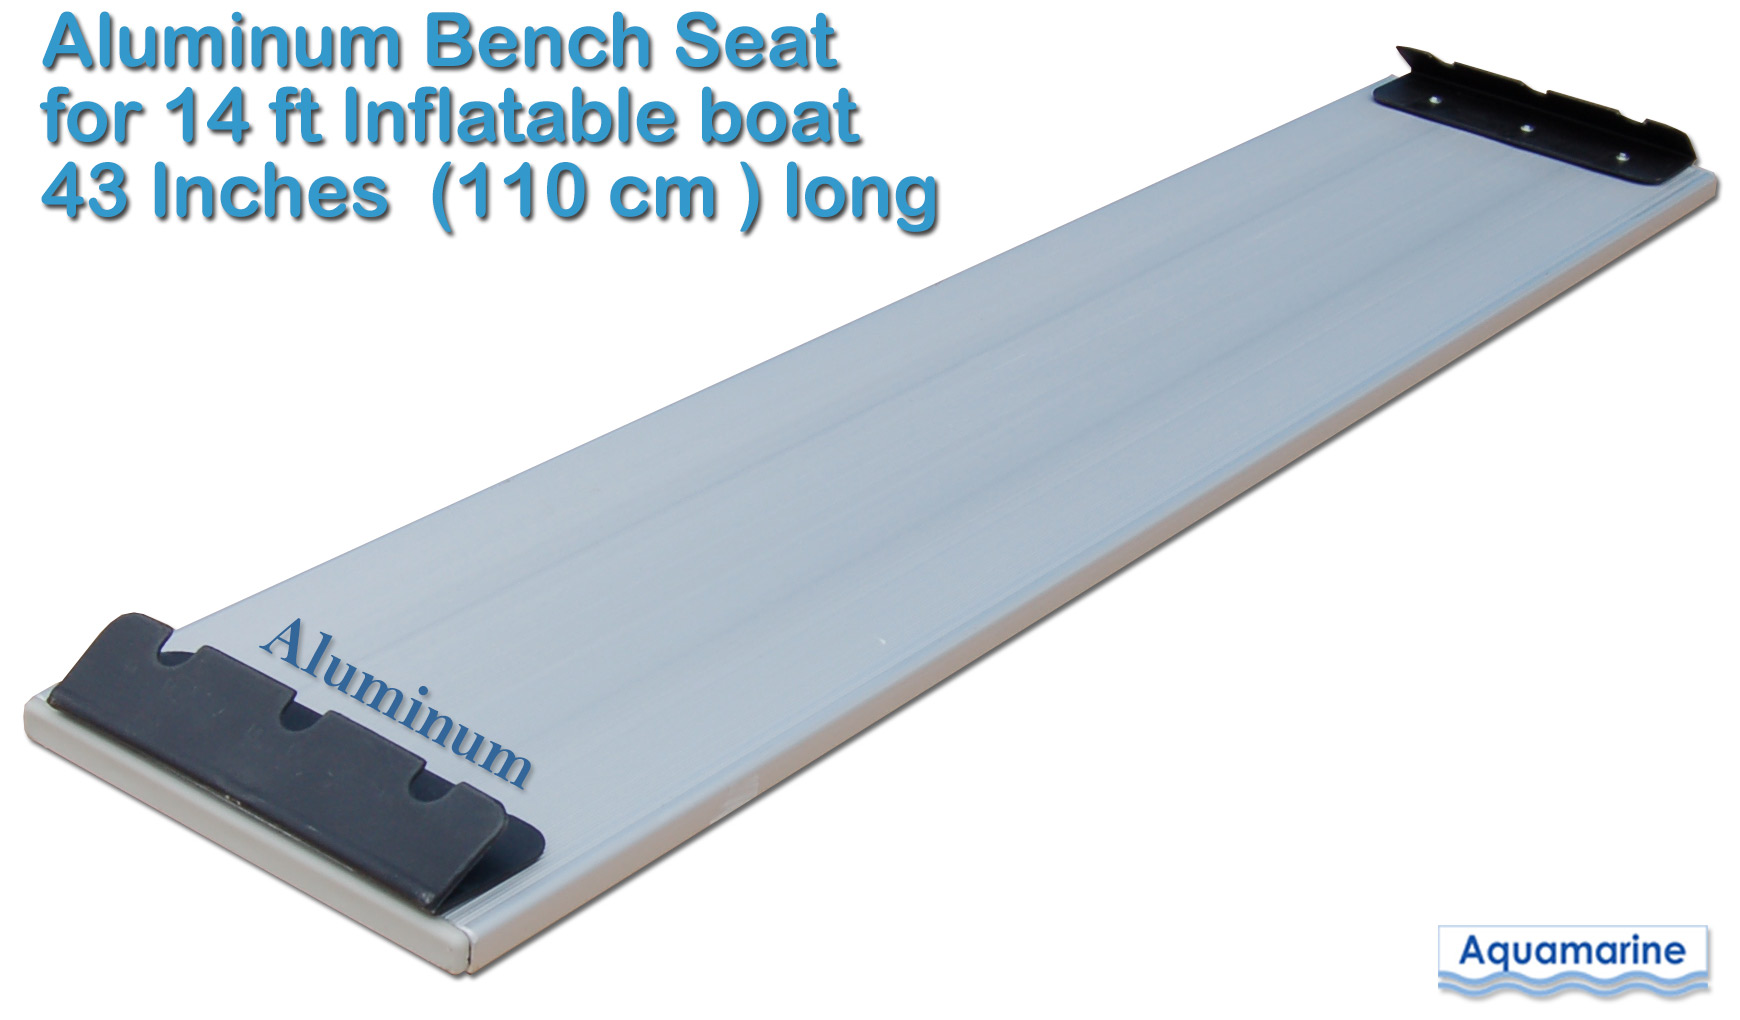 Aluminum lightweight bench seat (14' boat) Aquamarine Inflatable Boats